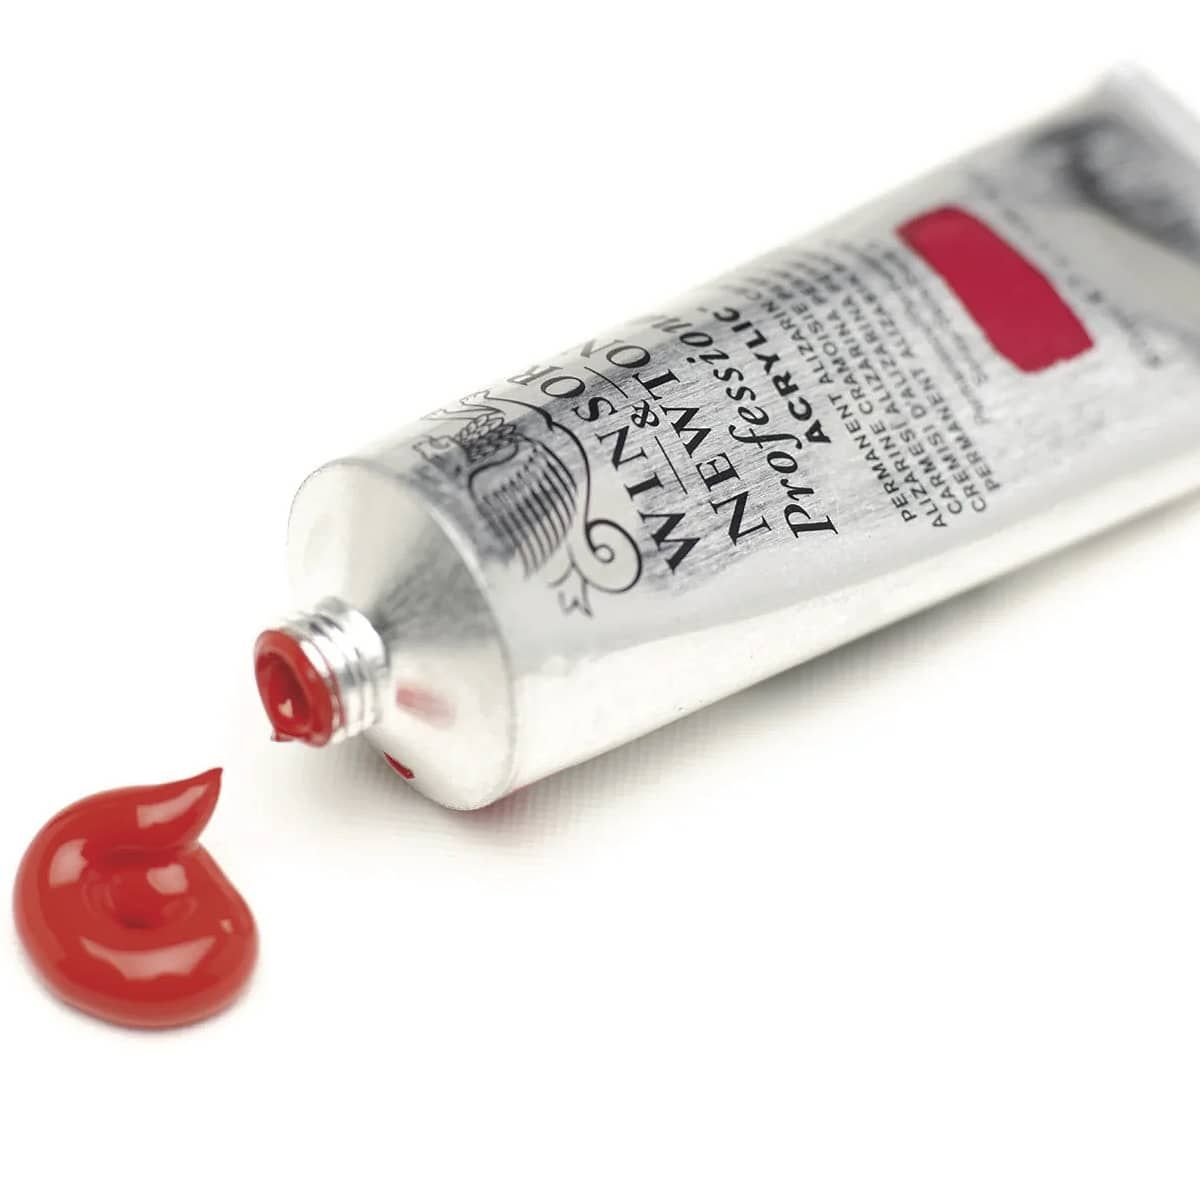 Winsor & Newton Professional Acrylic Permanent Alizarin Crimson 60 ml